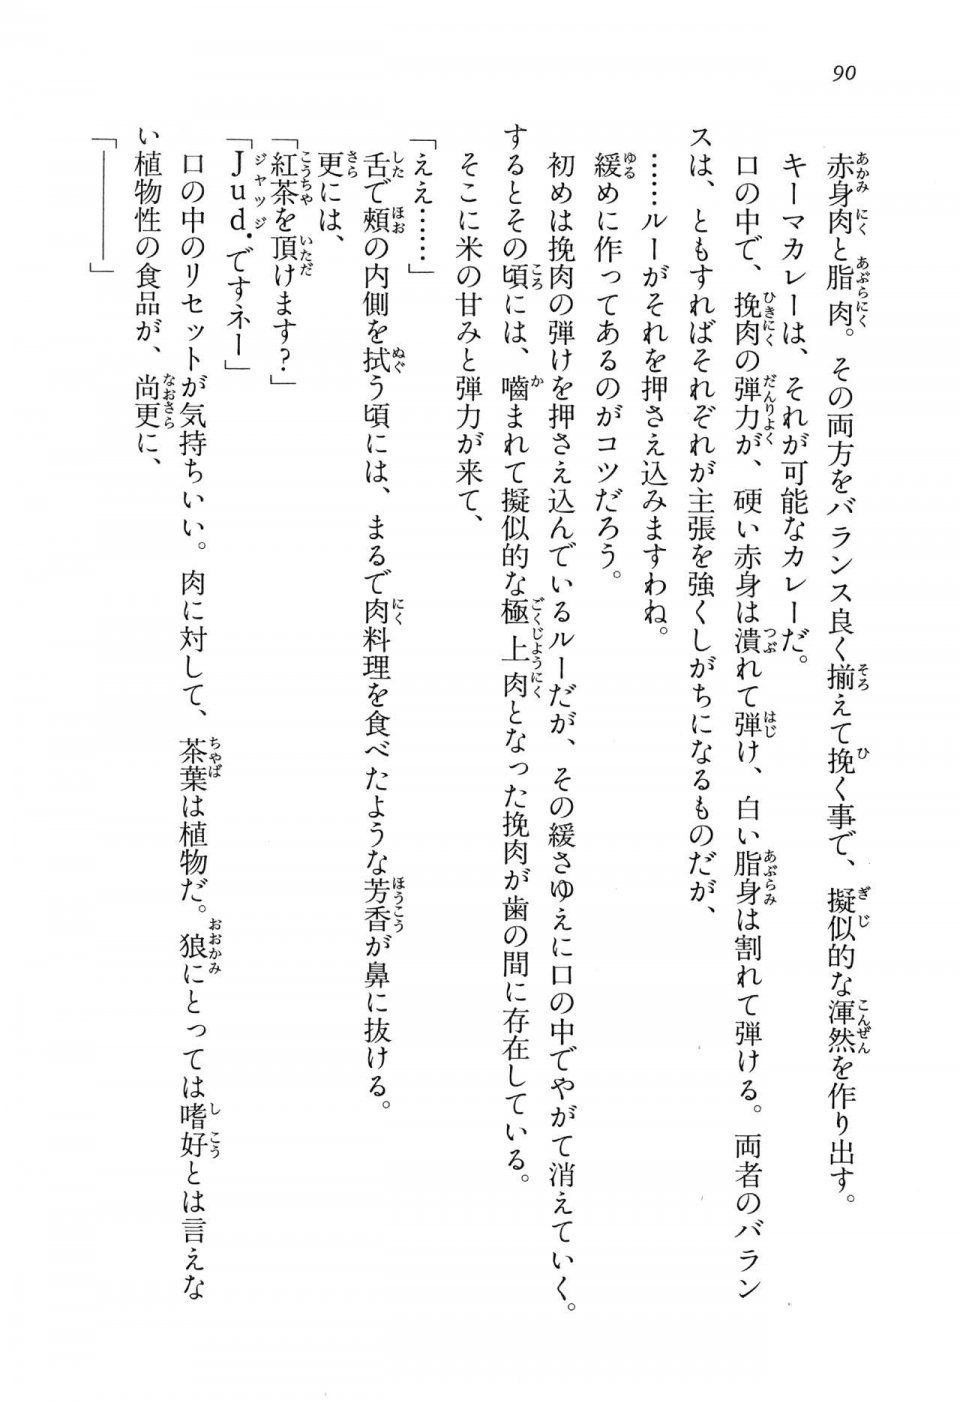 Kyoukai Senjou no Horizon LN Vol 15(6C) Part 1 - Photo #90